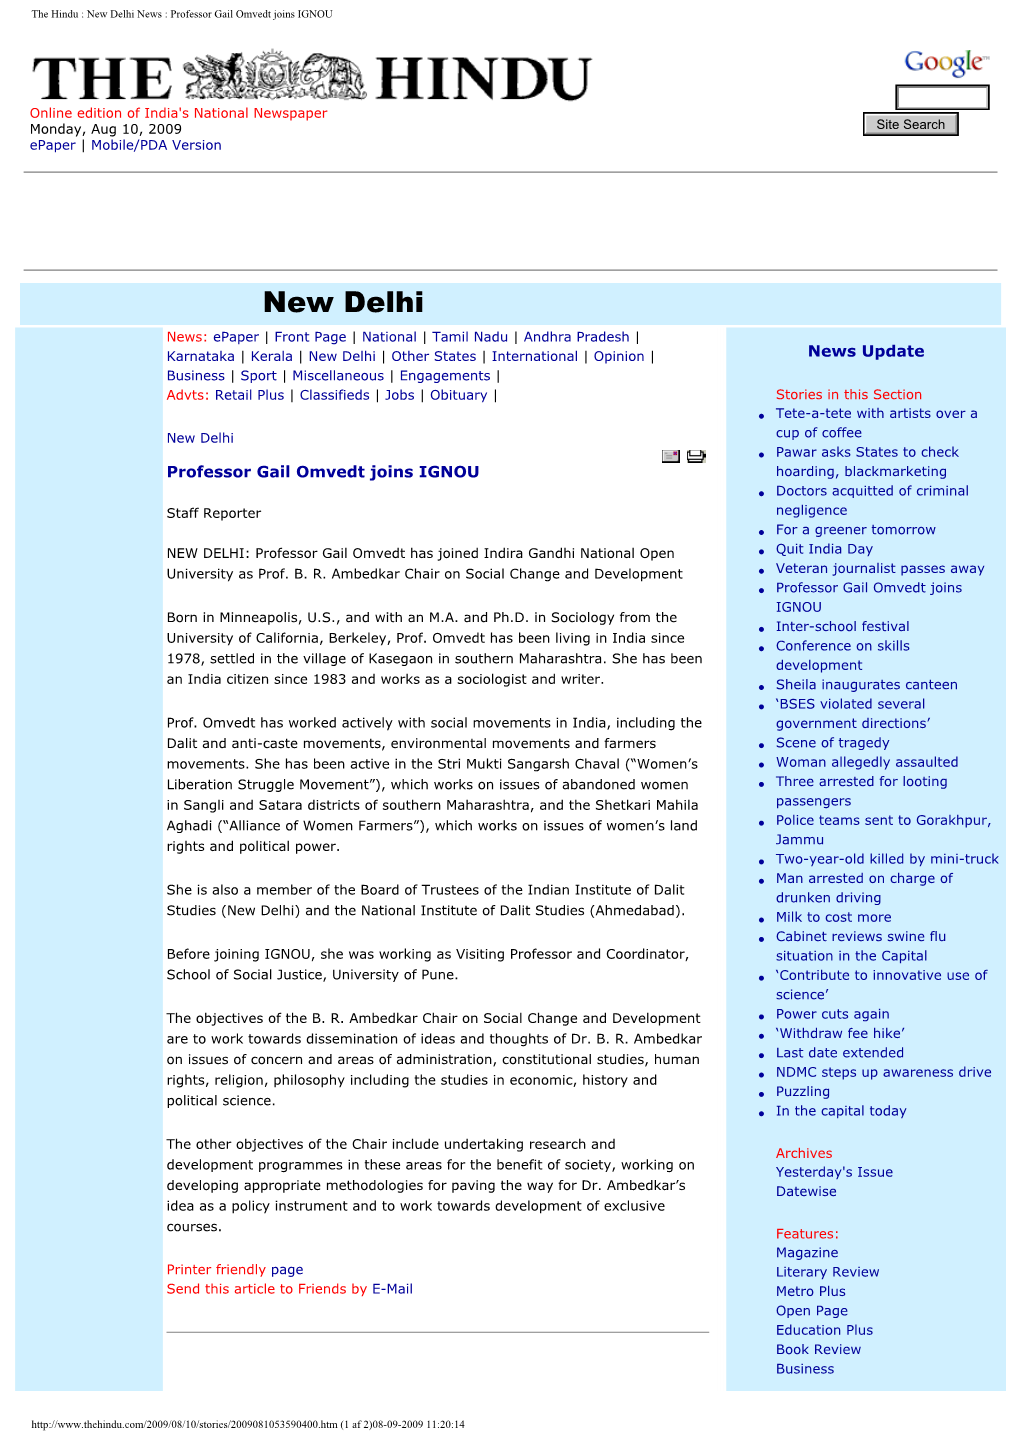 The Hindu : New Delhi News : Professor Gail Omvedt Joins IGNOU